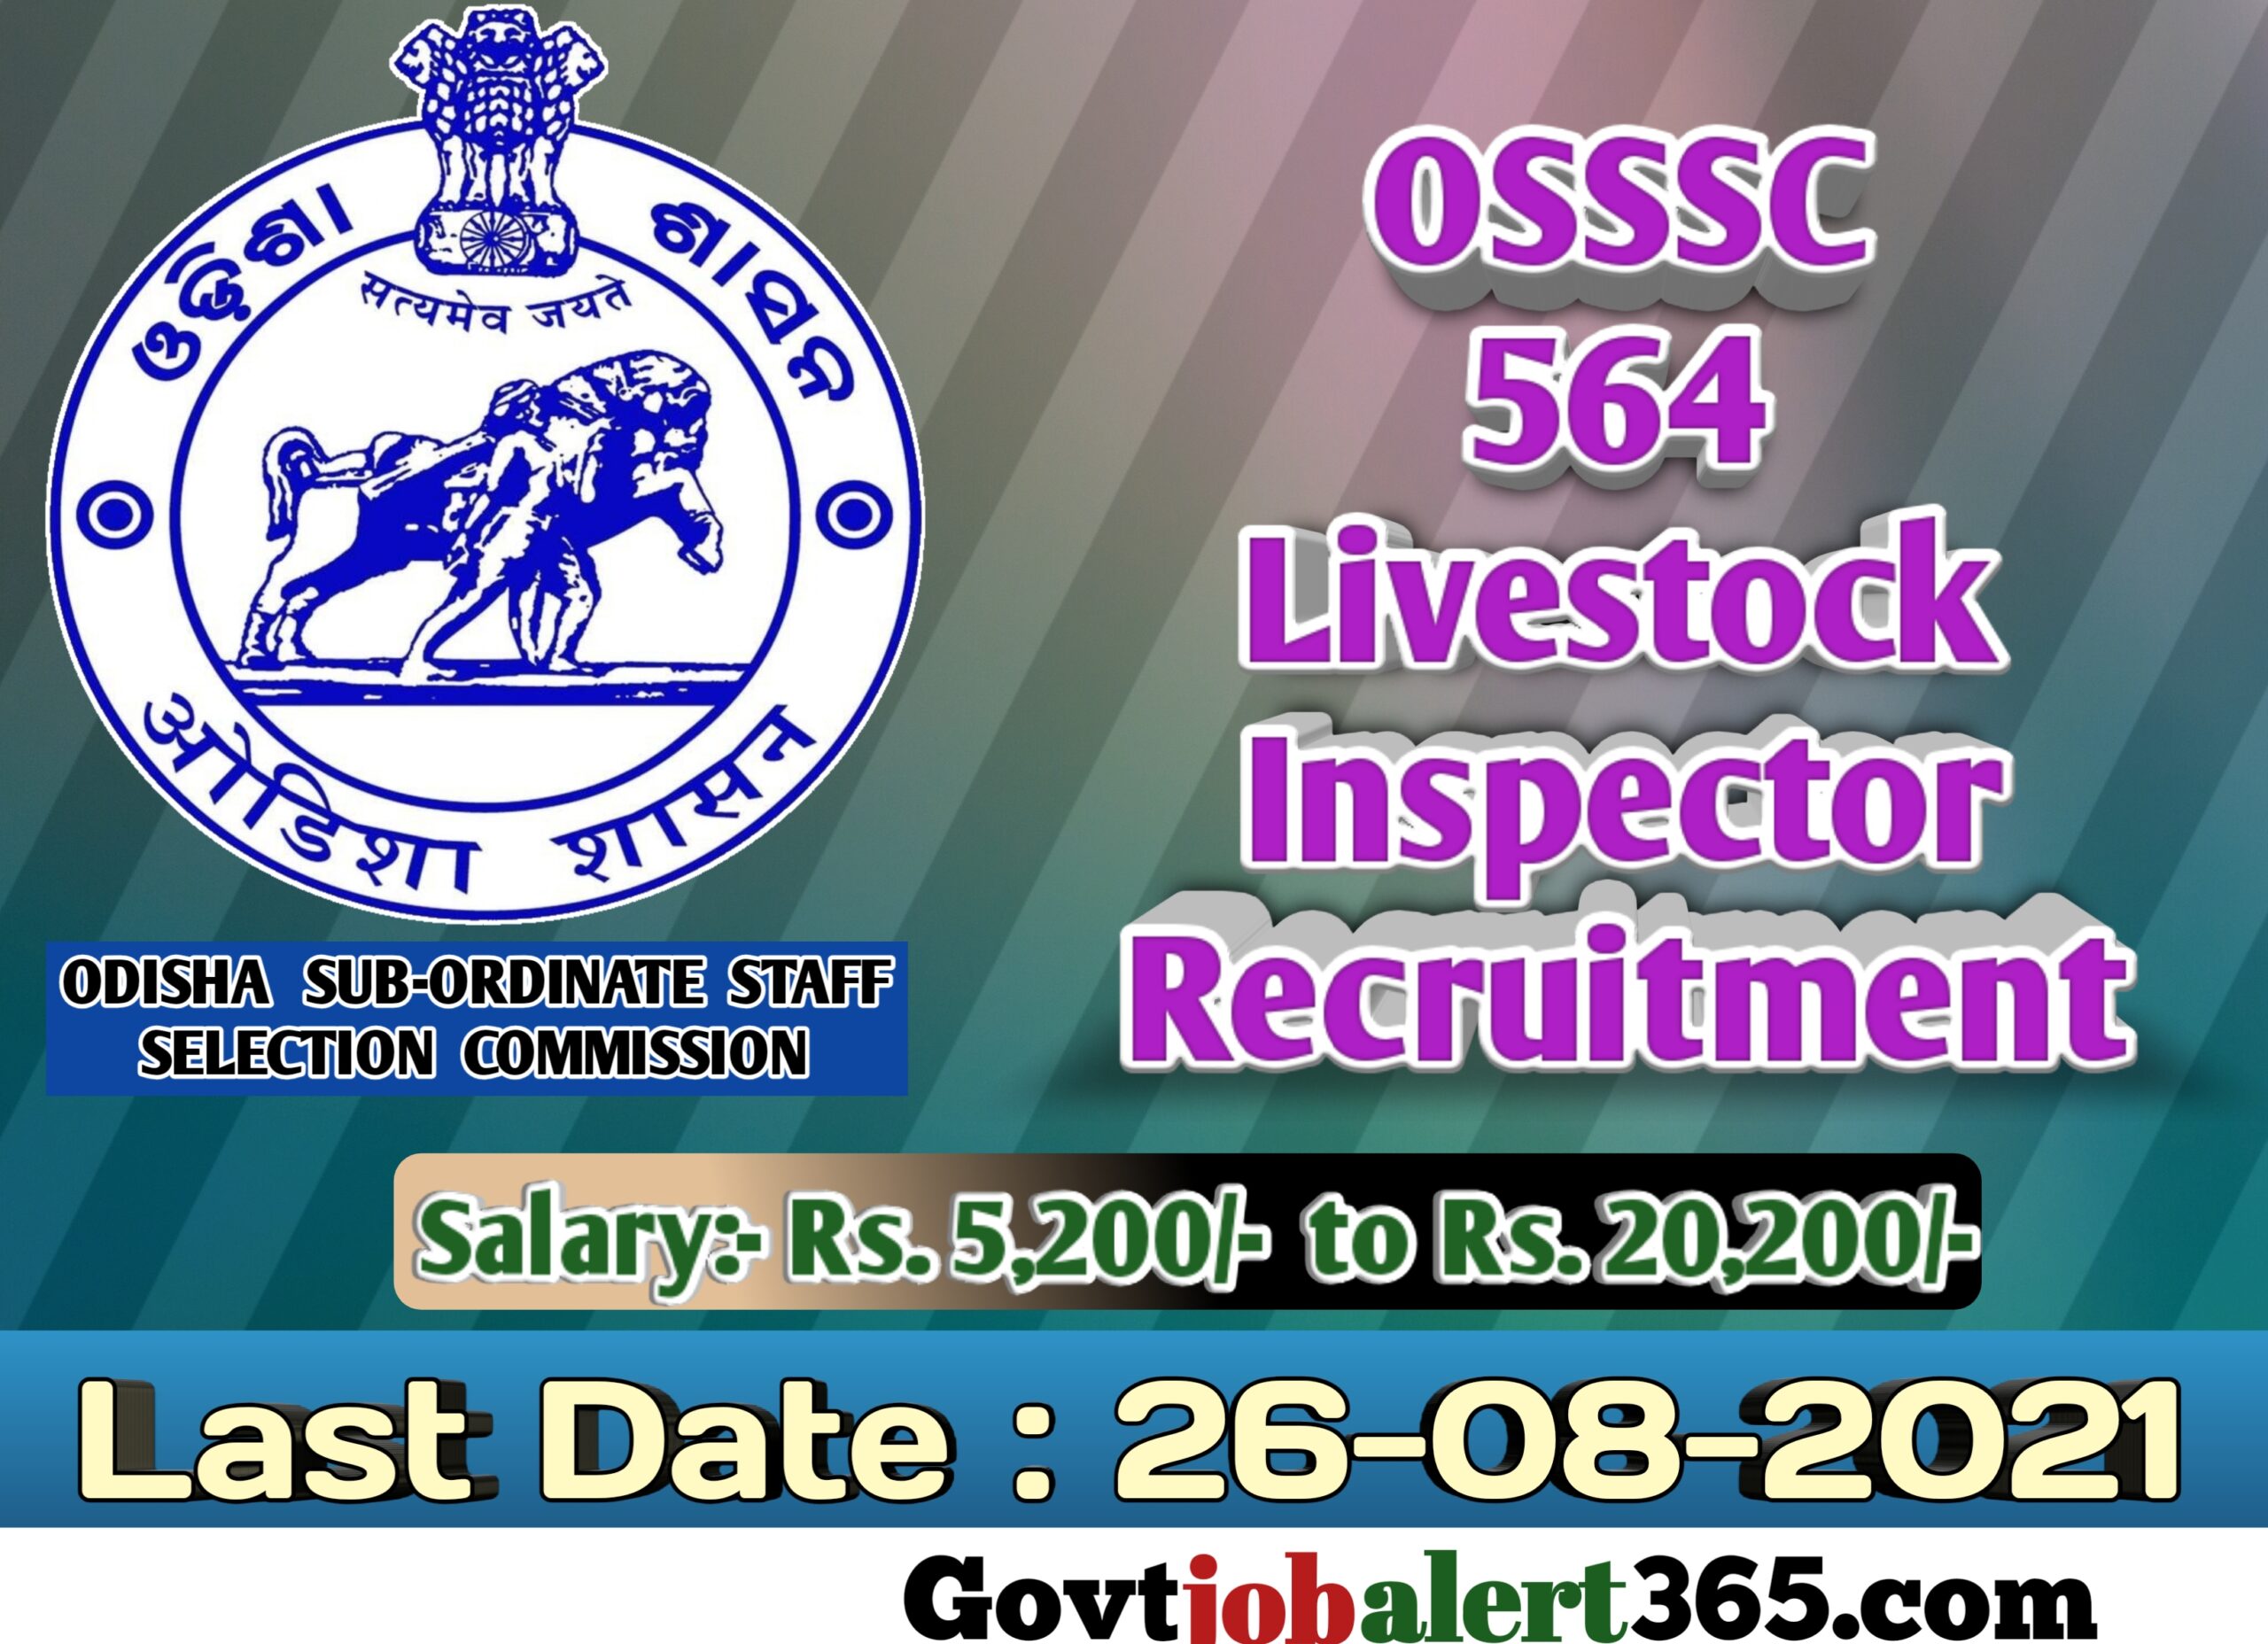 Odisha Sub-ordinate Staff Selection Commission Livestock Inspector Recruitment 2021